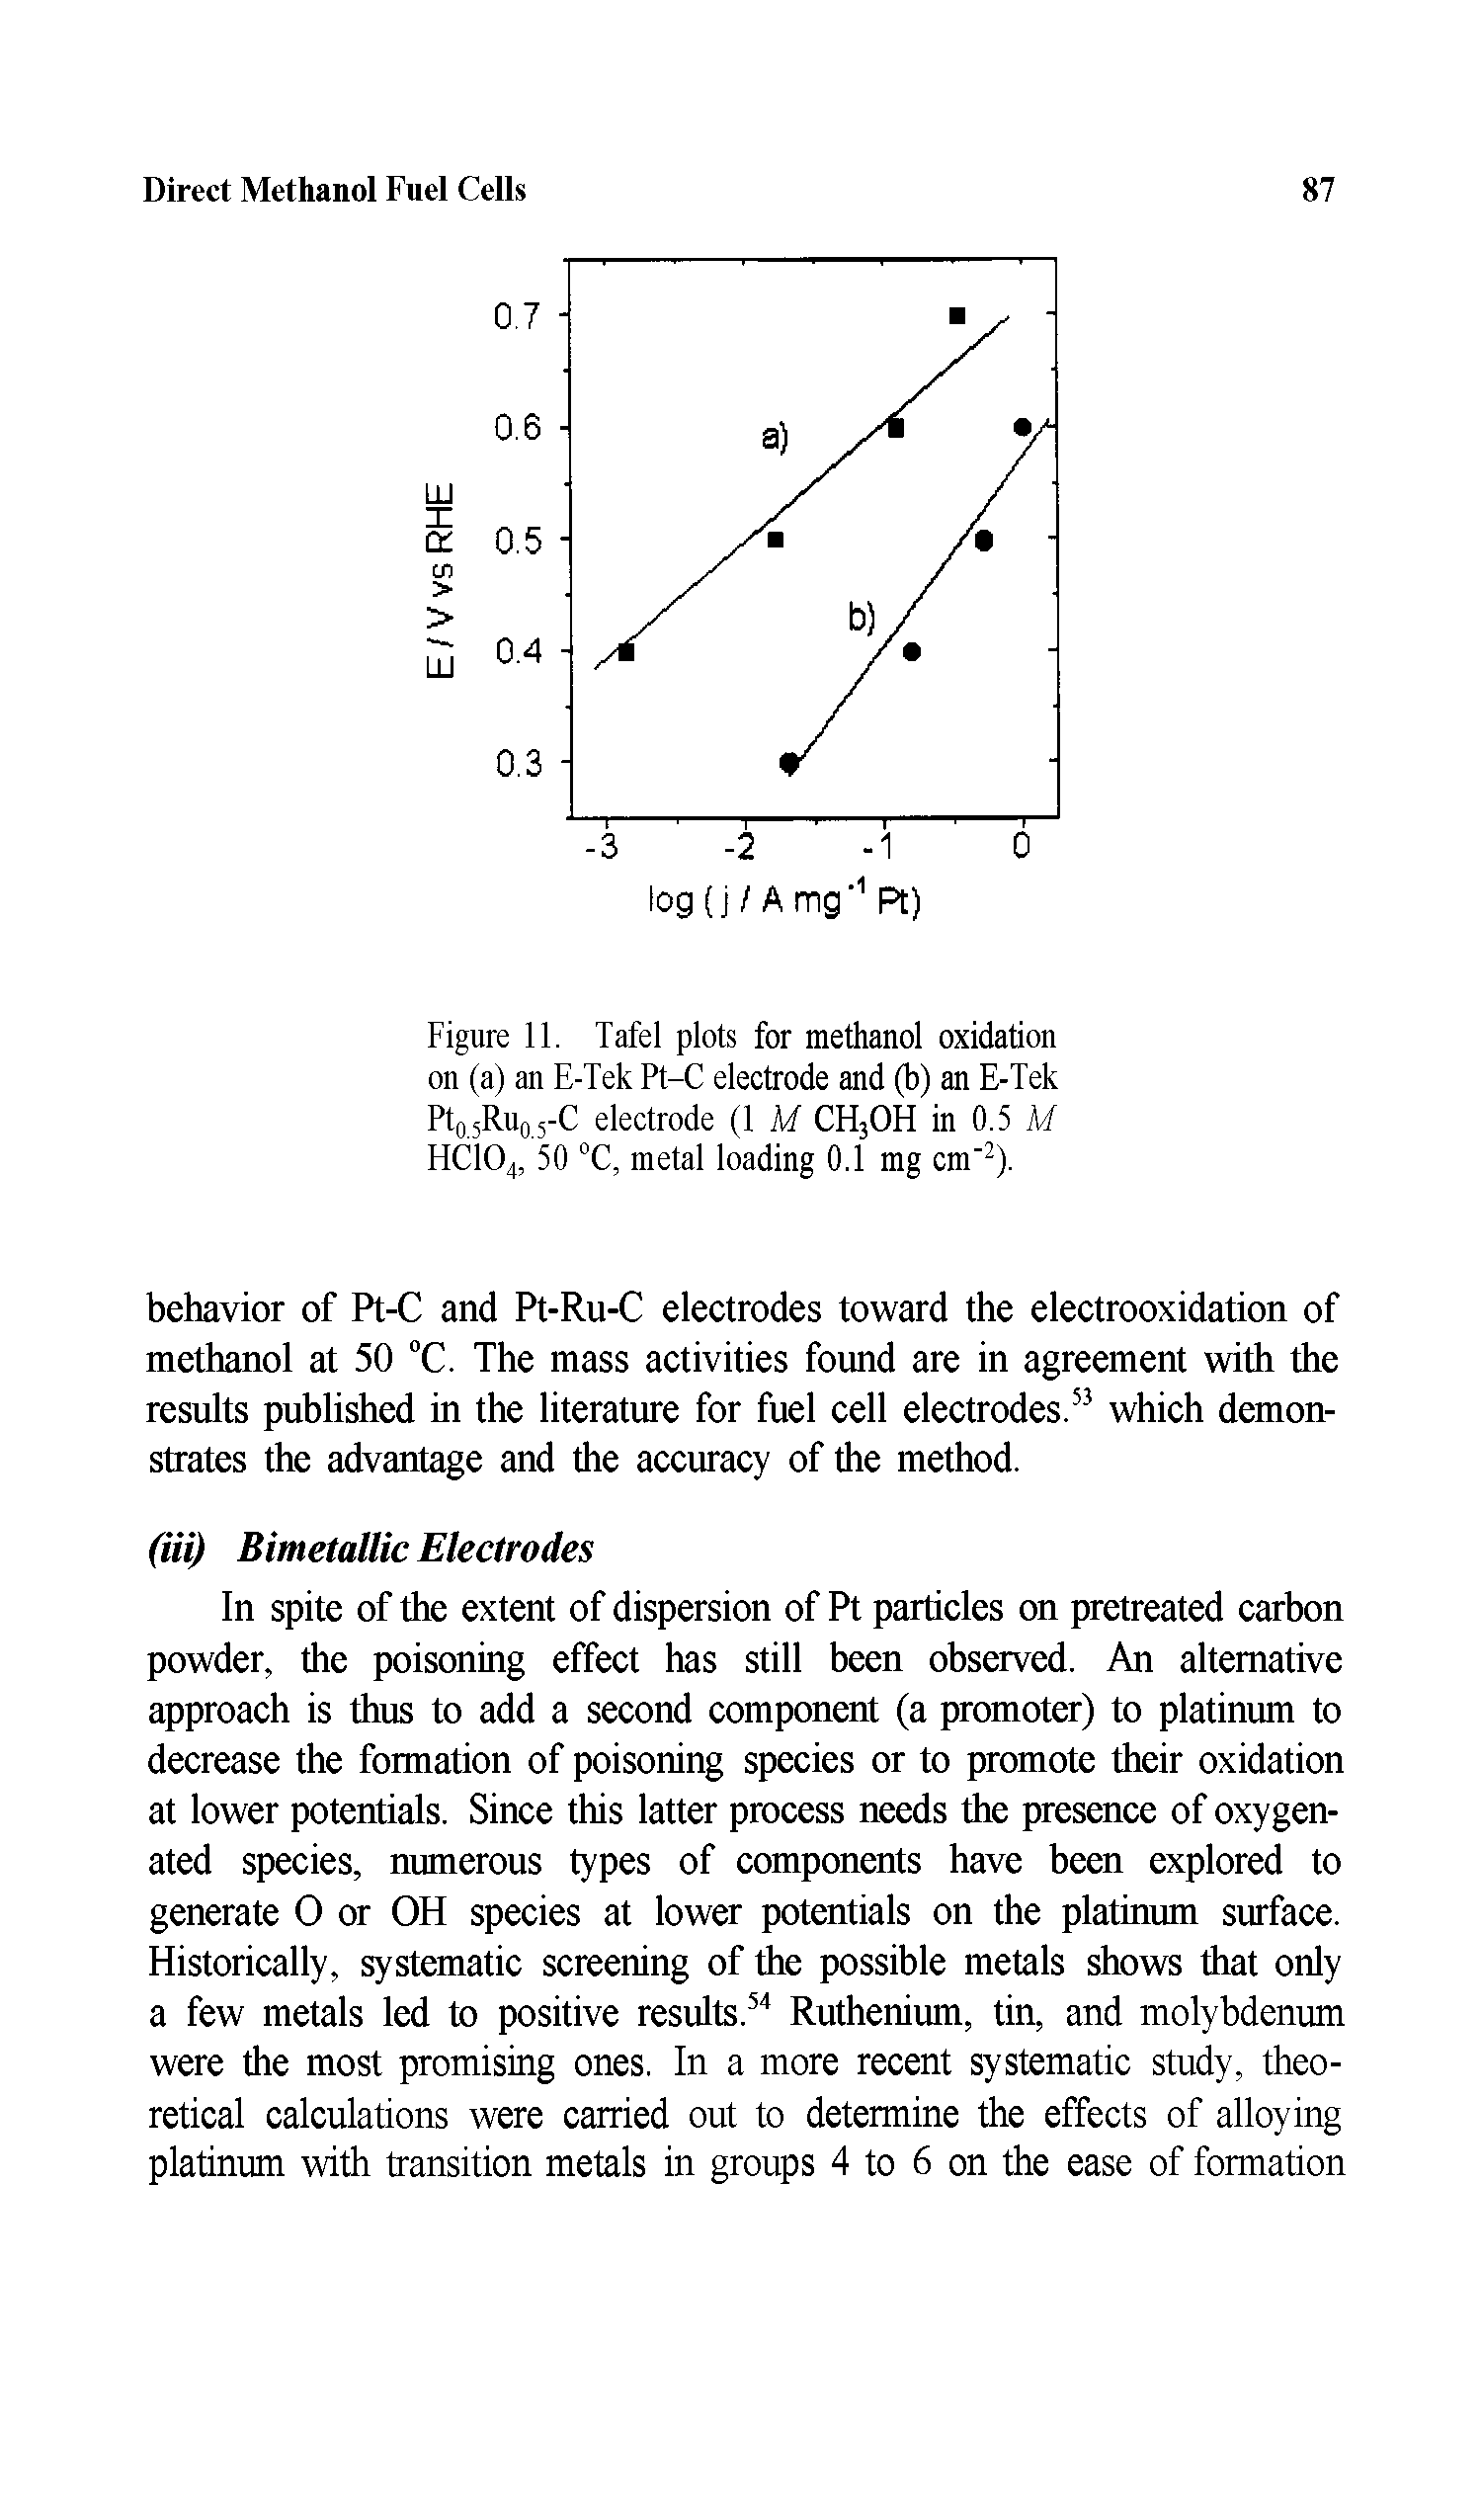 Figure 11. Tafel plots for methanol oxidation on (a) an E-Tek Pt-C electrode and (b) an E-Tek PtojRuoj-C electrode (1 M CH3OH in 0.5 M HQO4, 50 C, metal loading 0.1 mg cm" ).